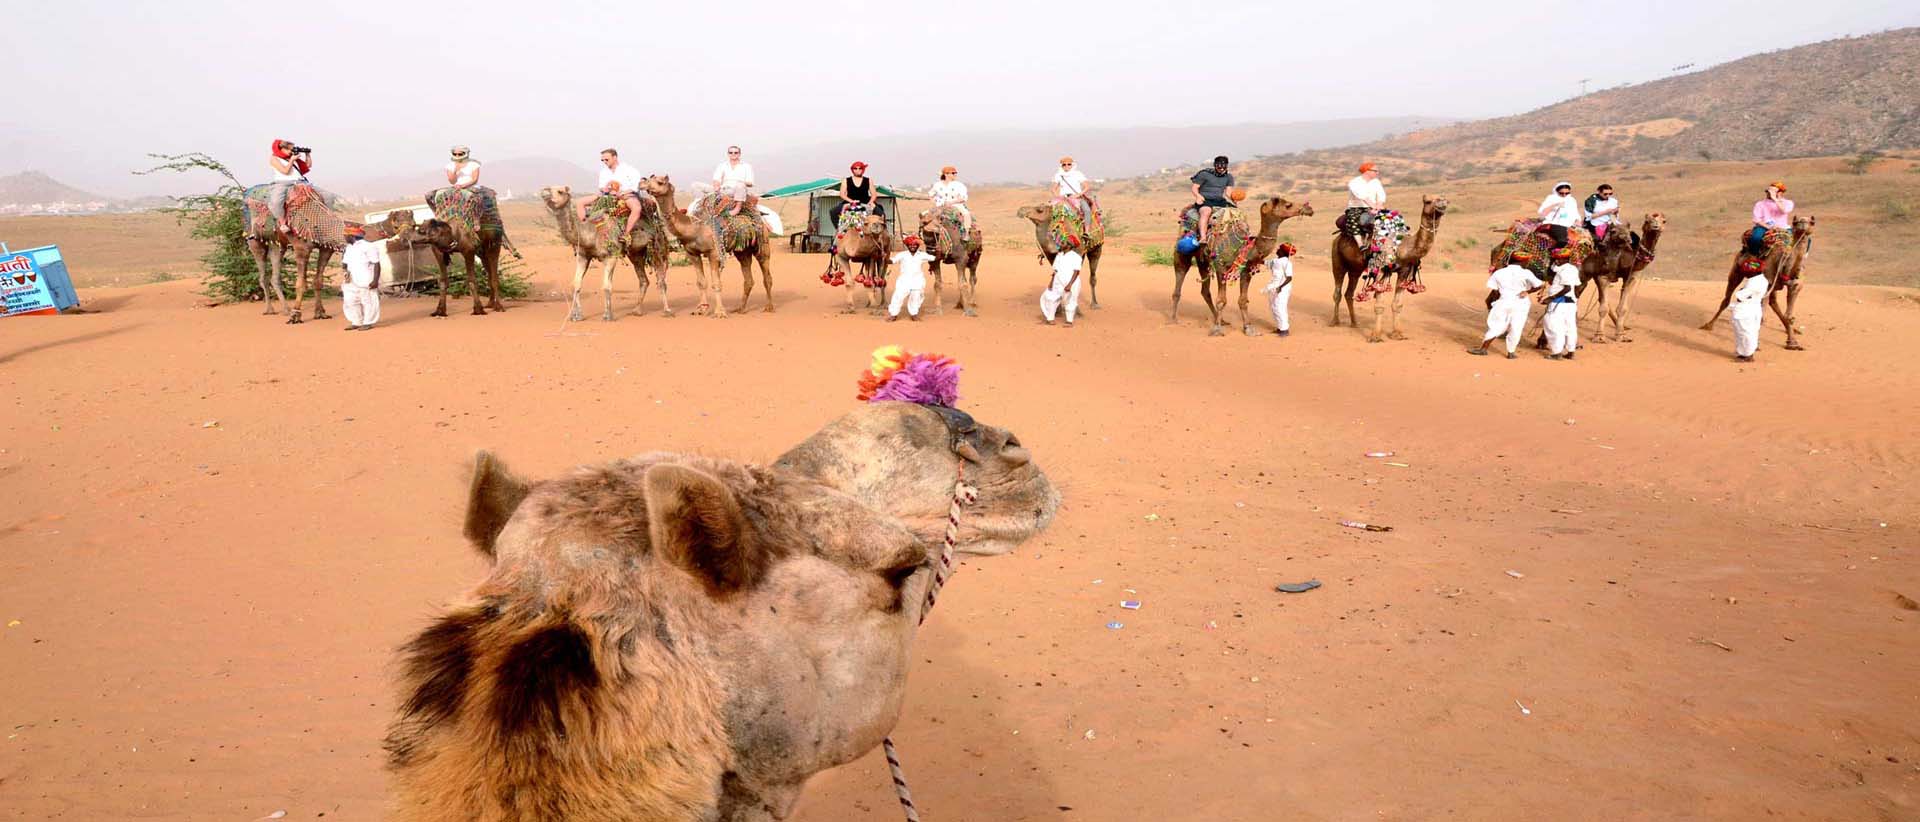 camp pushkar,desert camp,tent pushkar,fair accomodation, adventure pushkar safari, camel safari